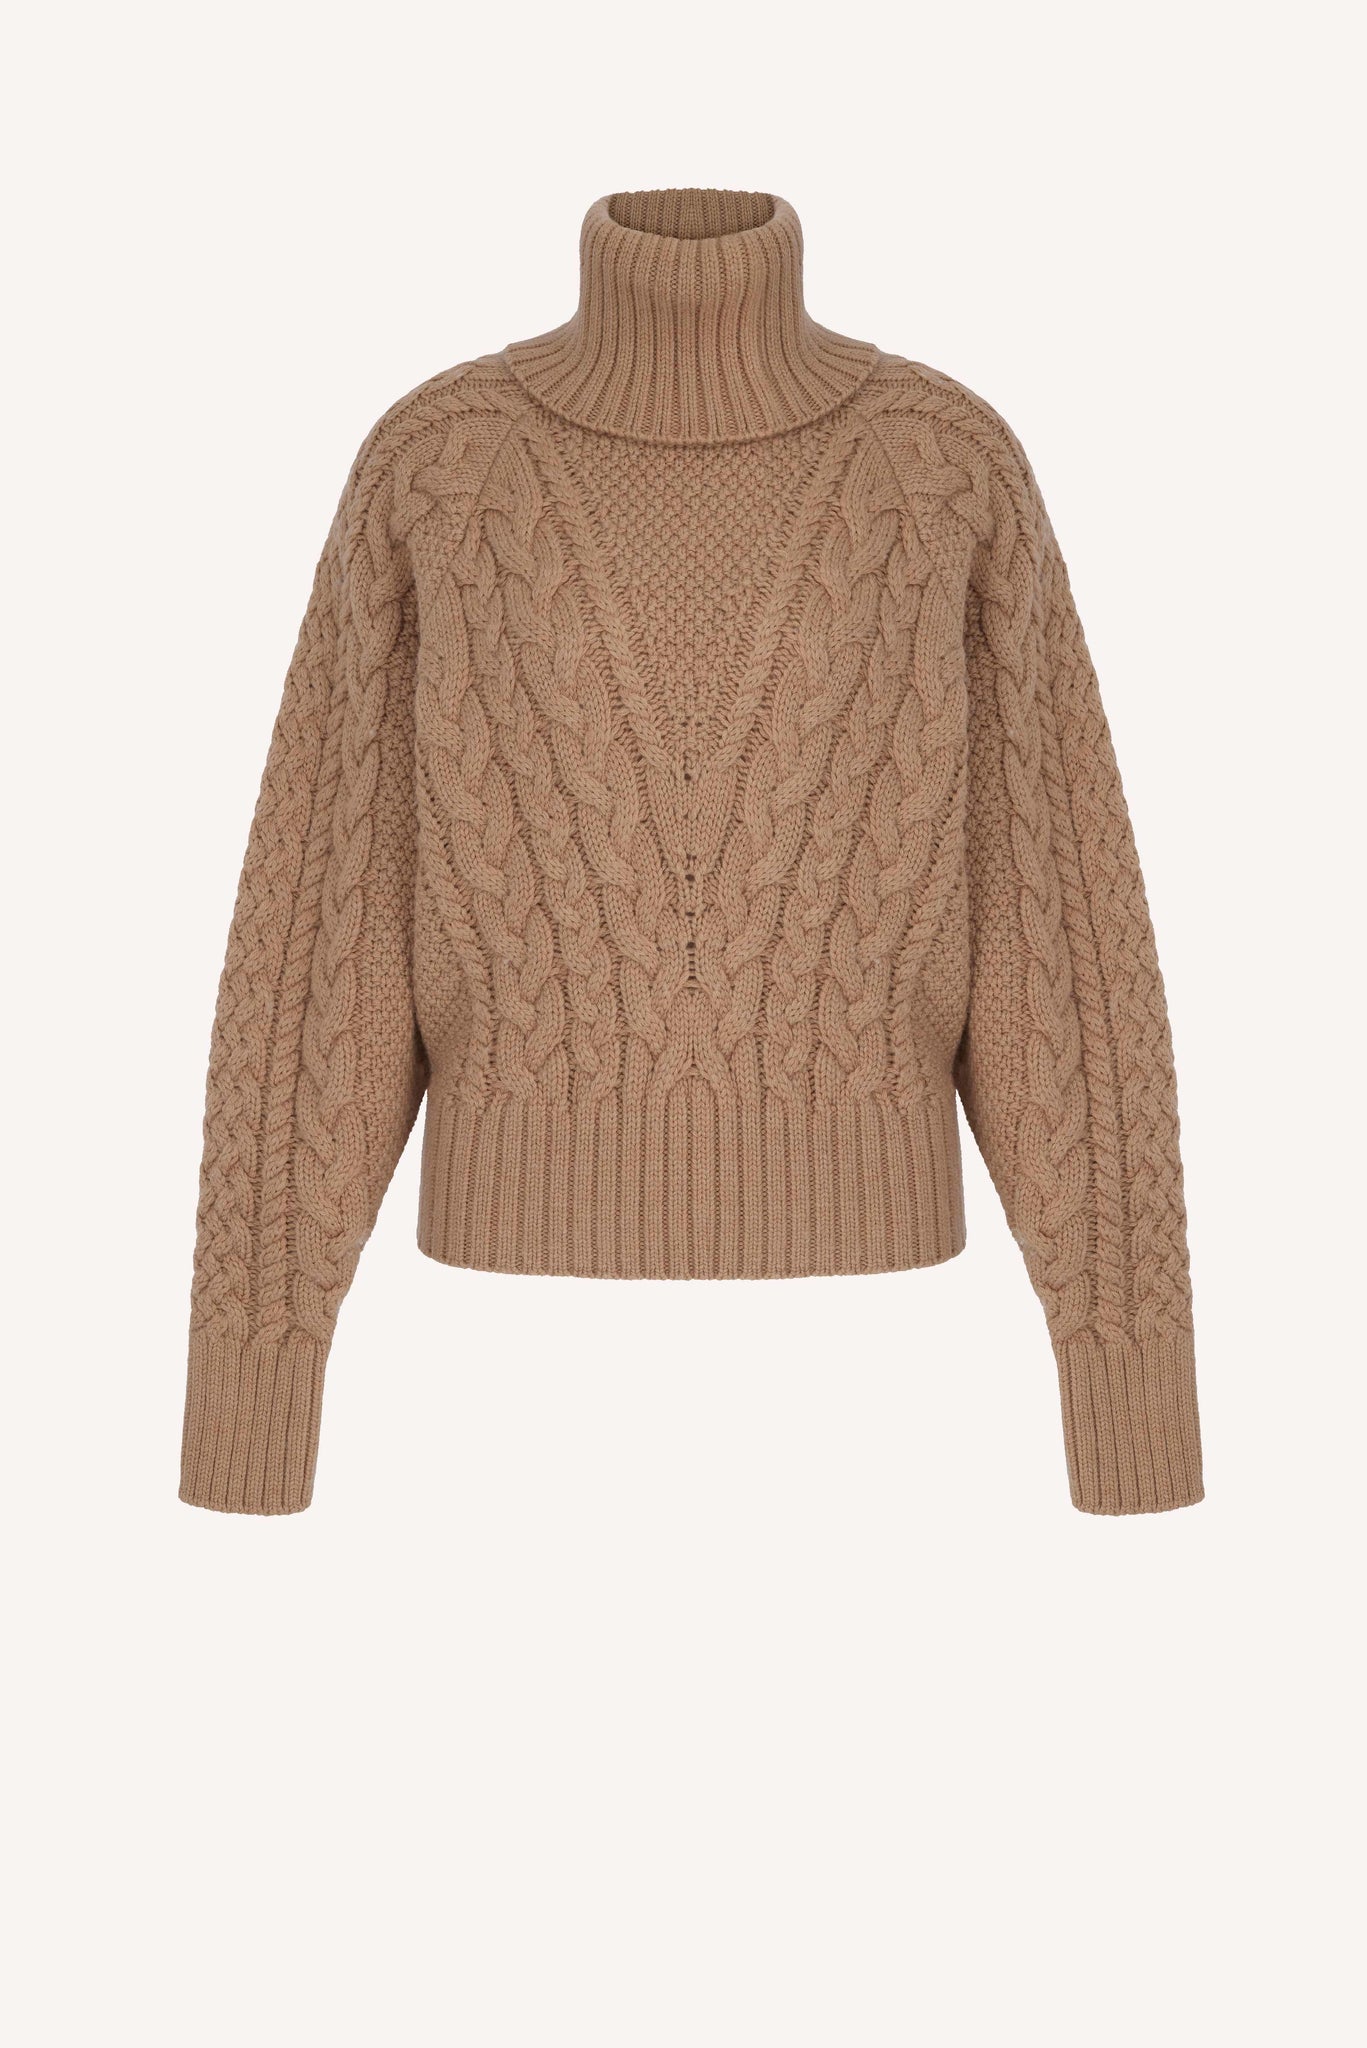 Otis Sand Melange Cashfeel Cable Knit Sweater | Emilia Wickstead